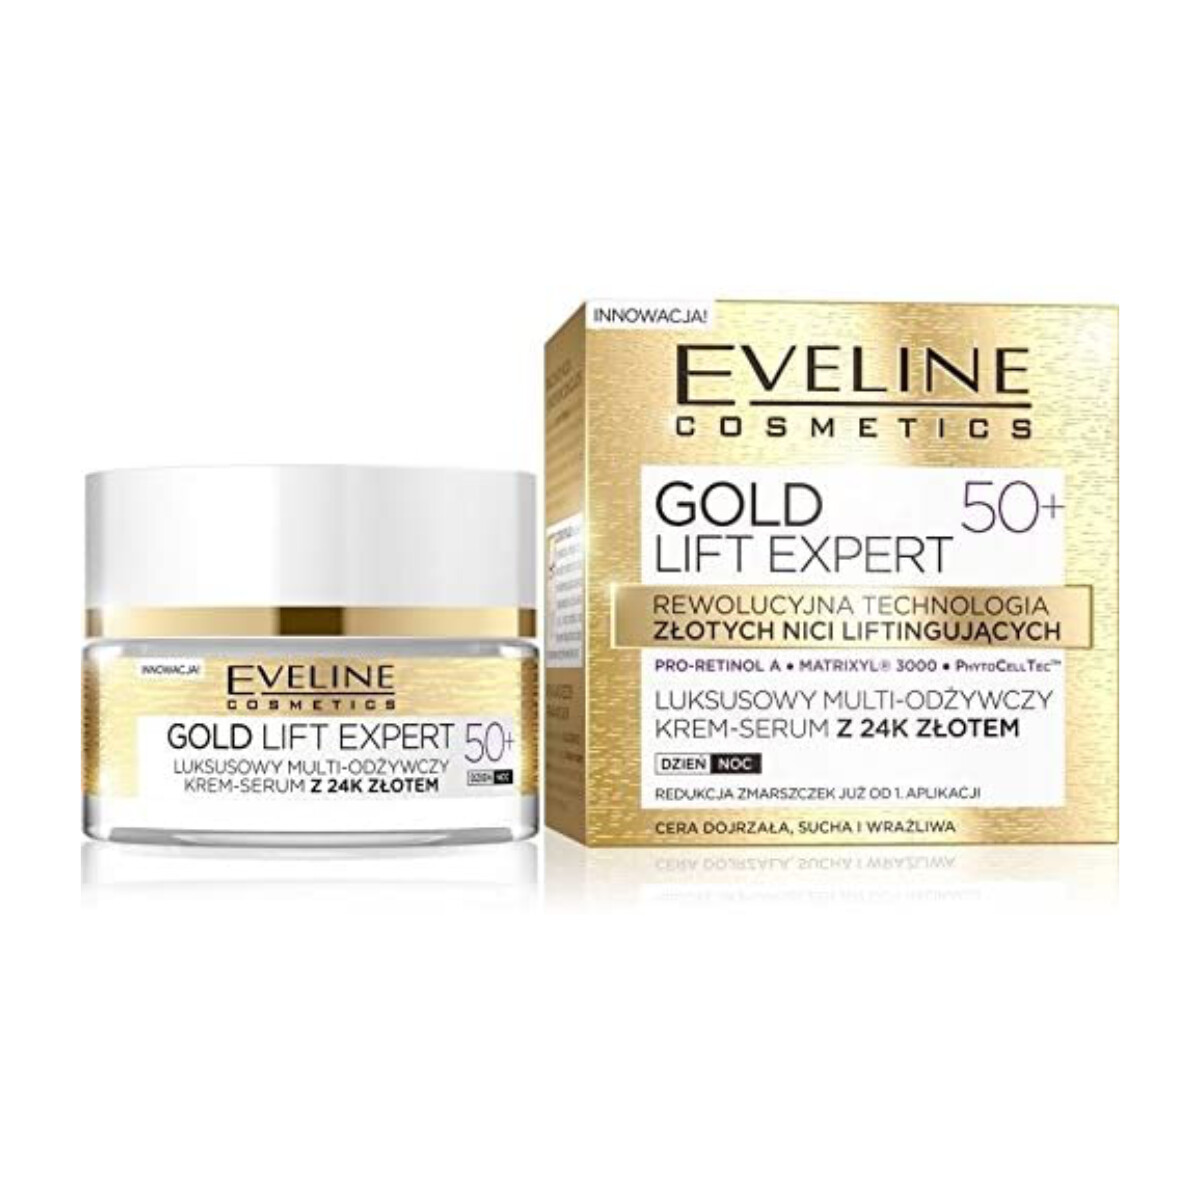 Eveline Cosmetics 24K Gold Lift Expert 50+ Day/Night Face Cream-Serum 50ml (T)